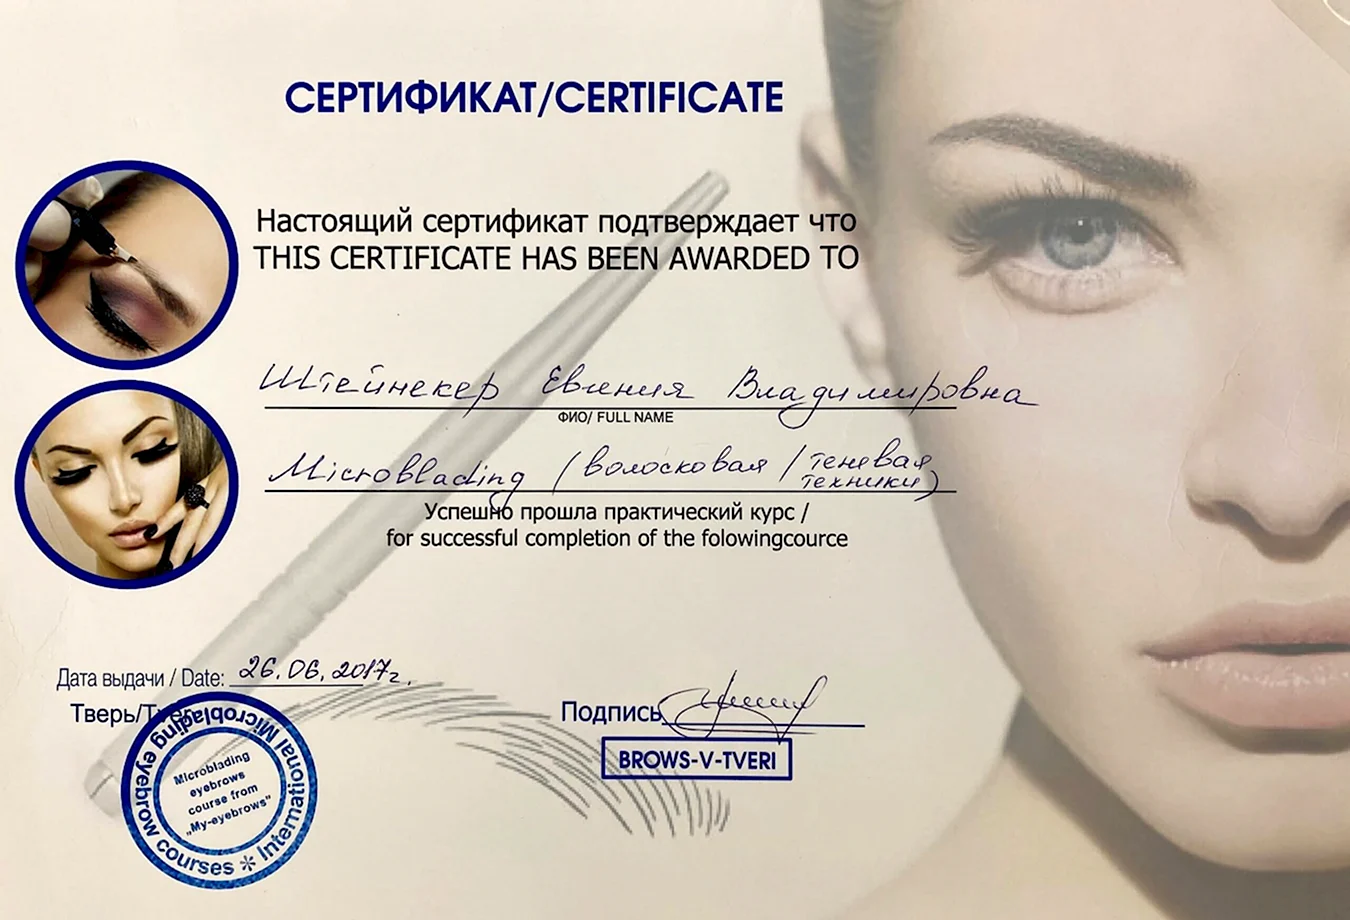 Сертификат микробрейдинг